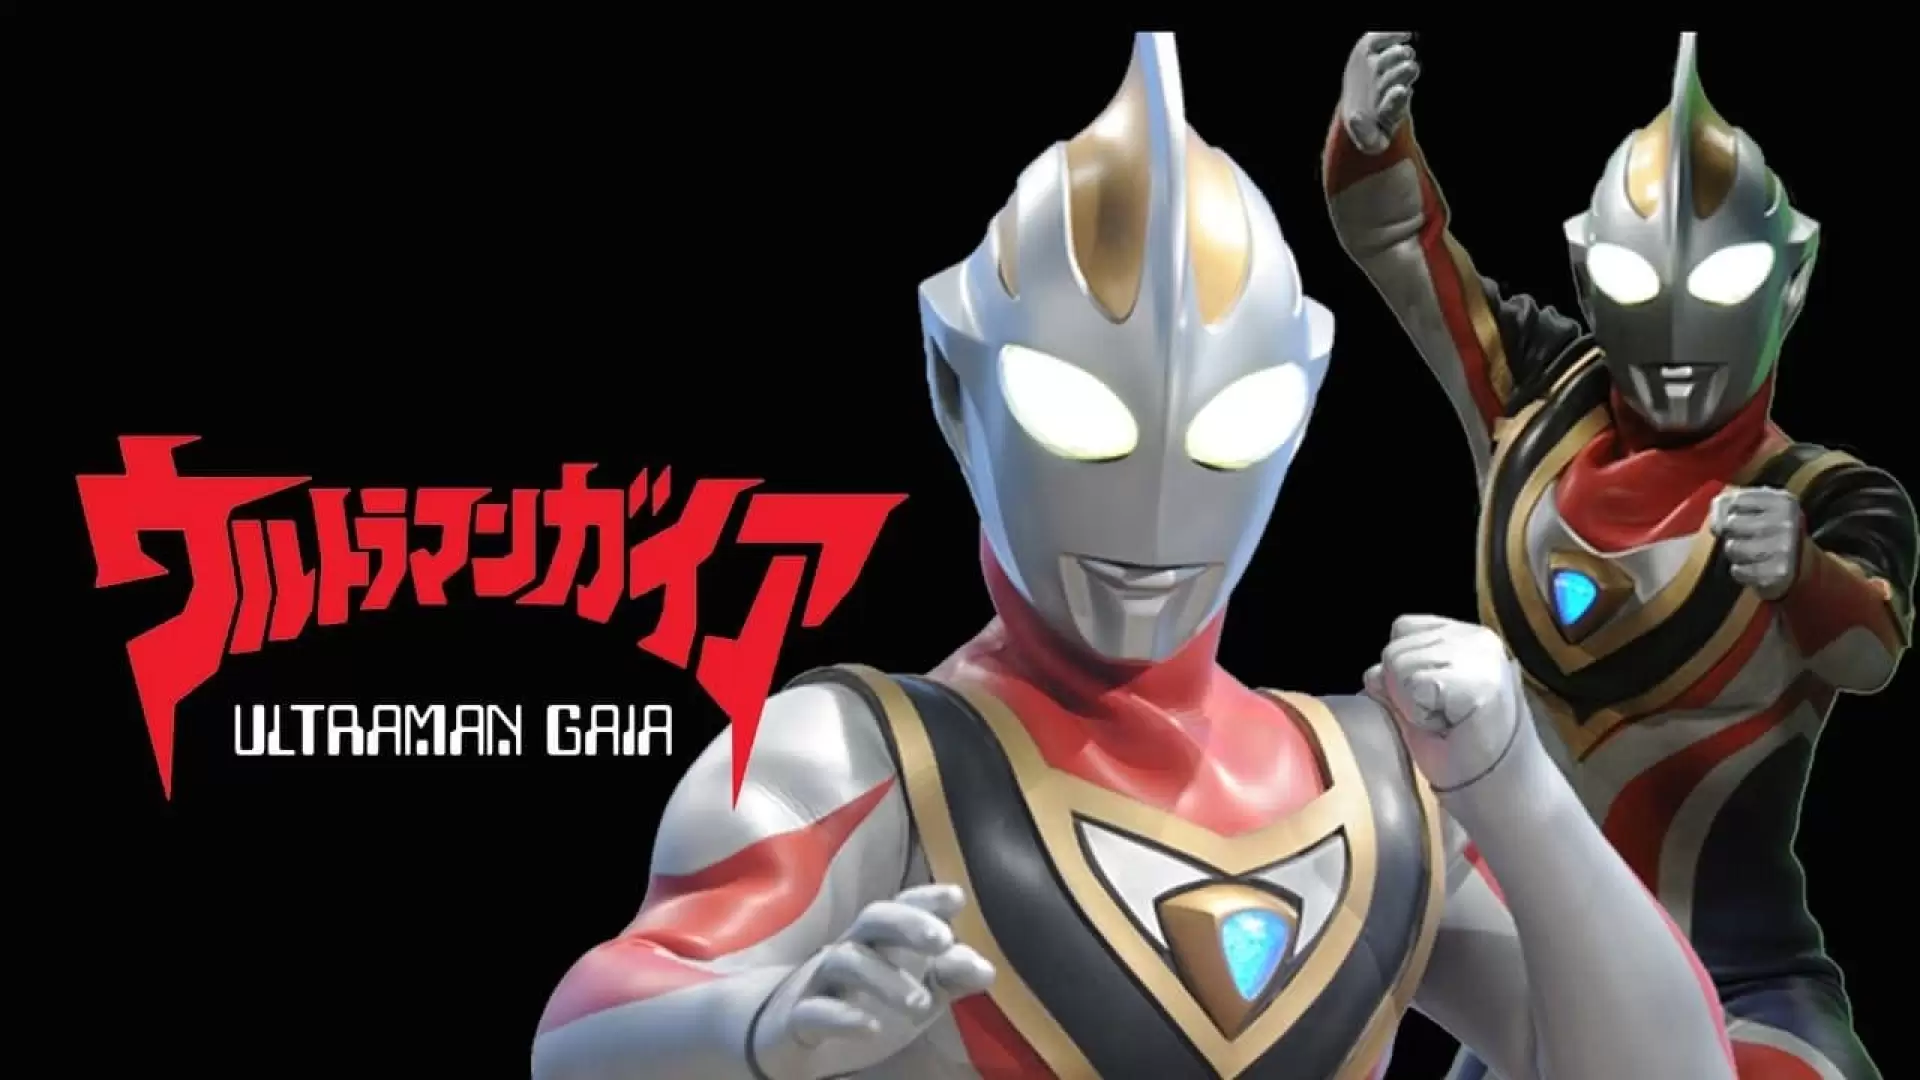 دانلود سریال Ultraman Gaia 1998 (اولترامان گایا)